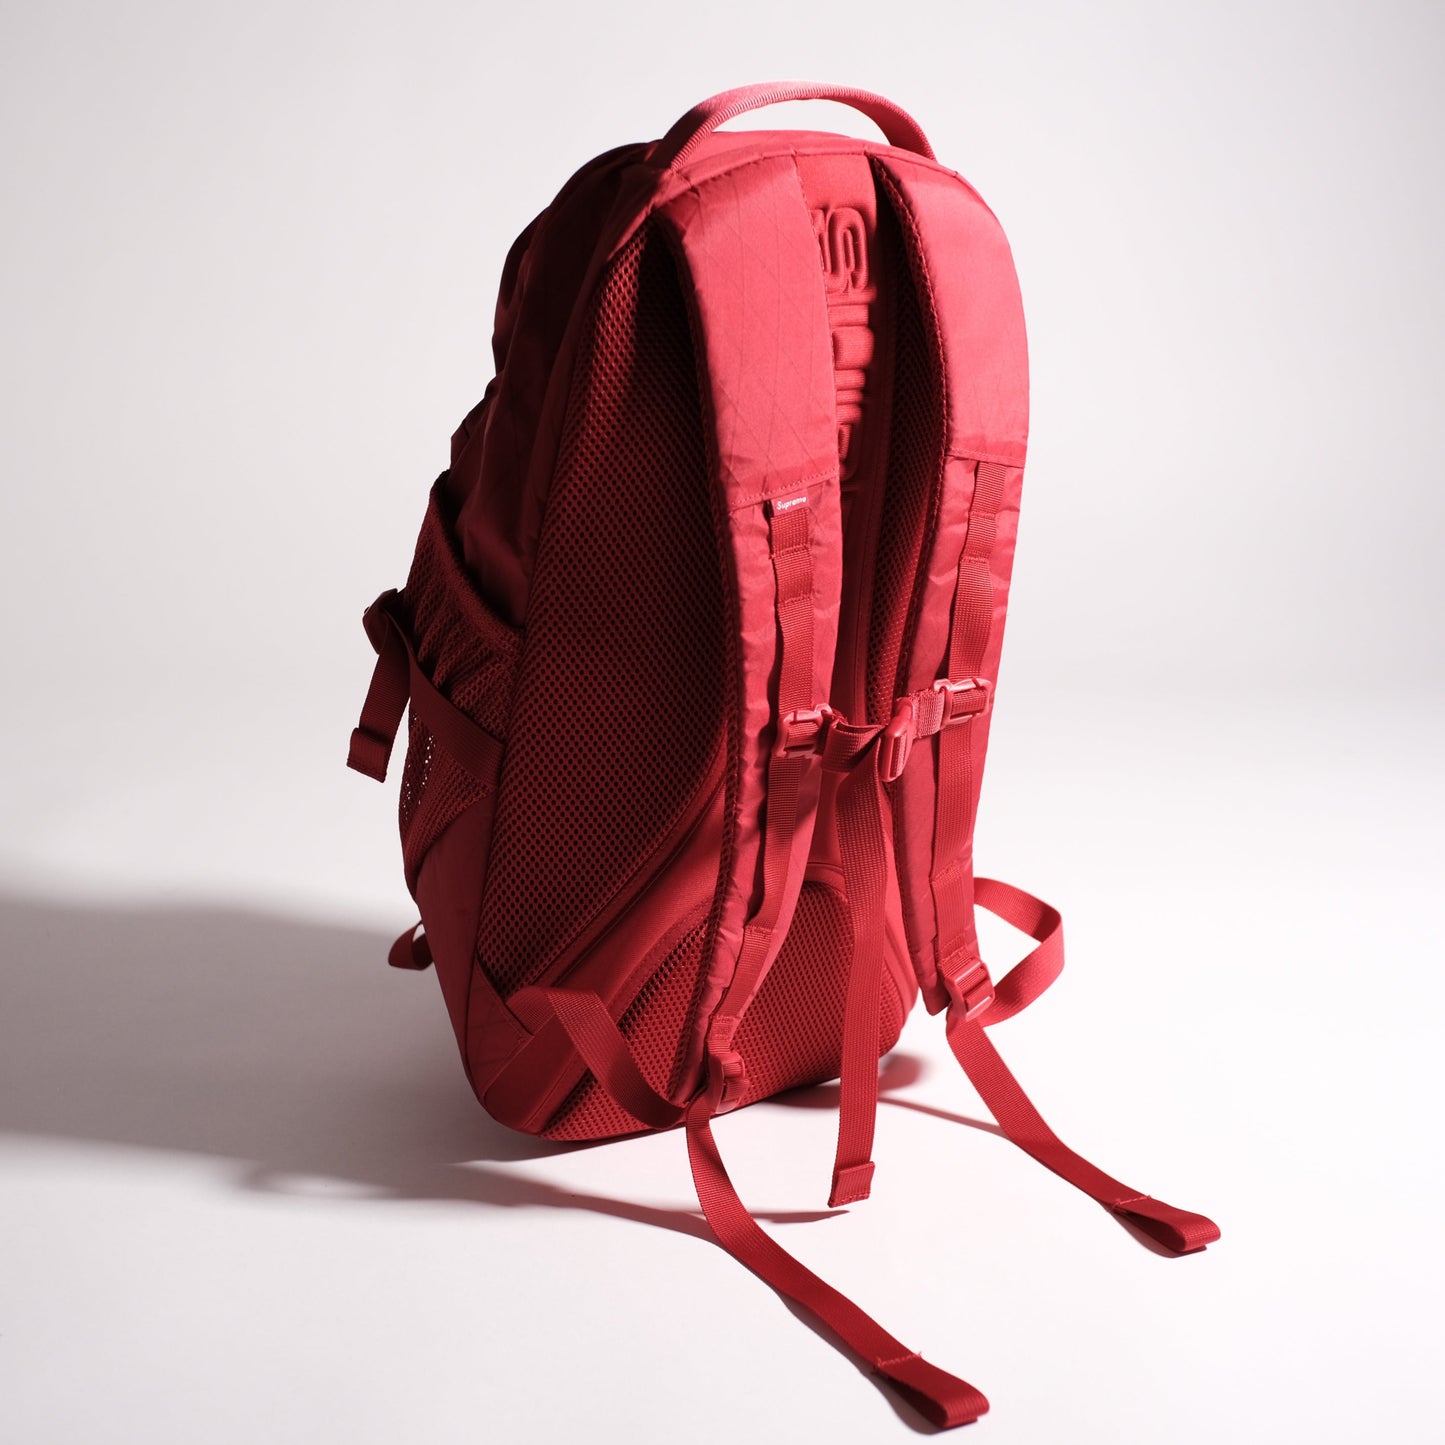 Supreme Backpack Red